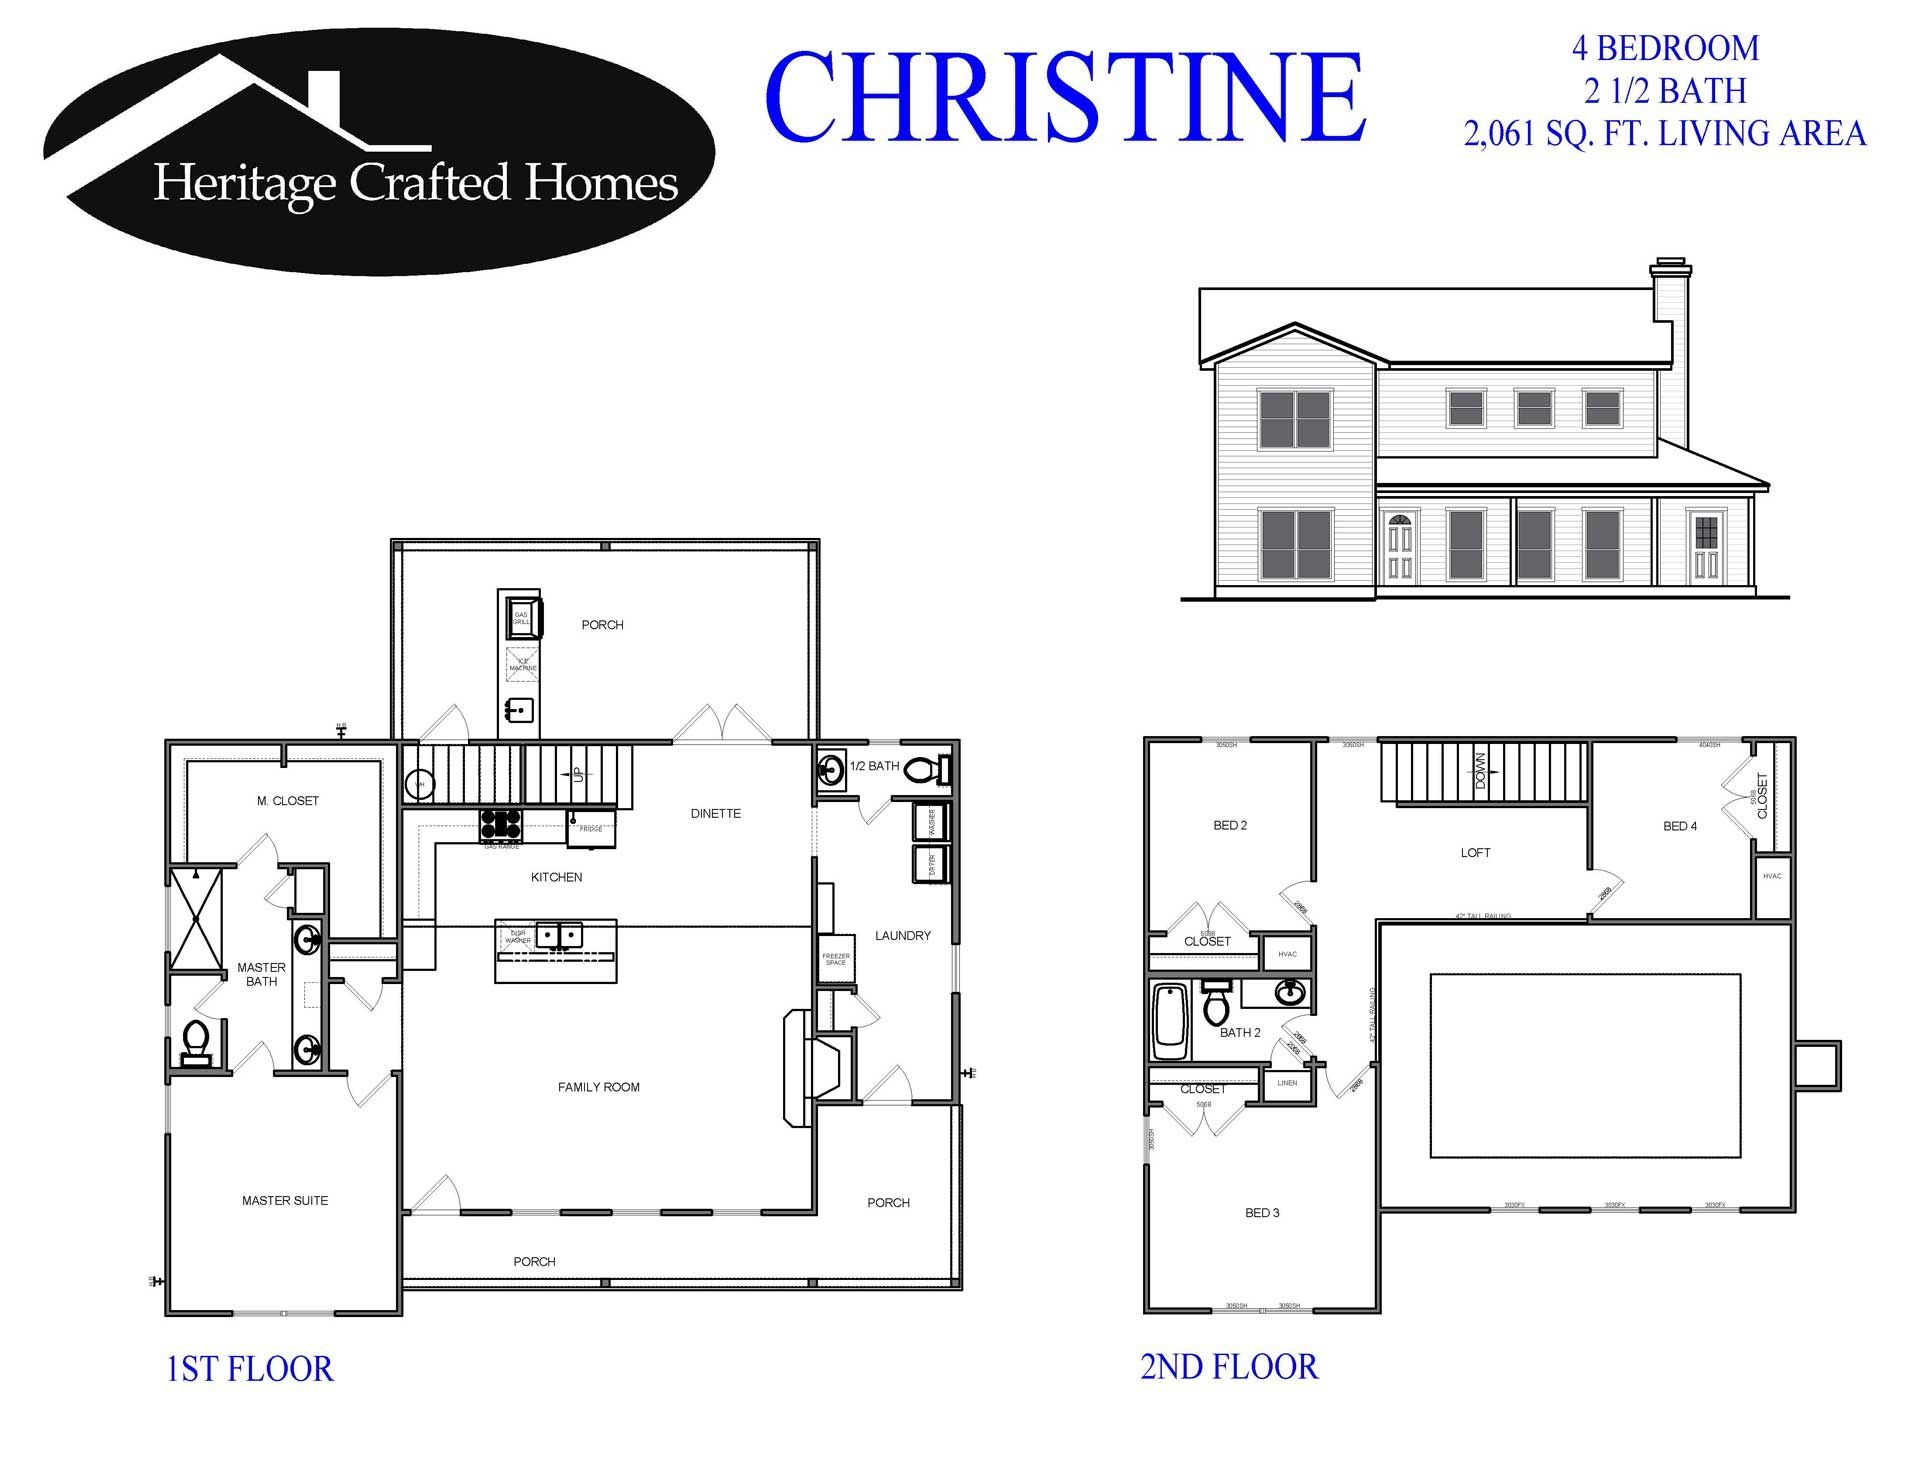 Christine brochure — San Antonio, TX — Heritage Crafted Homes